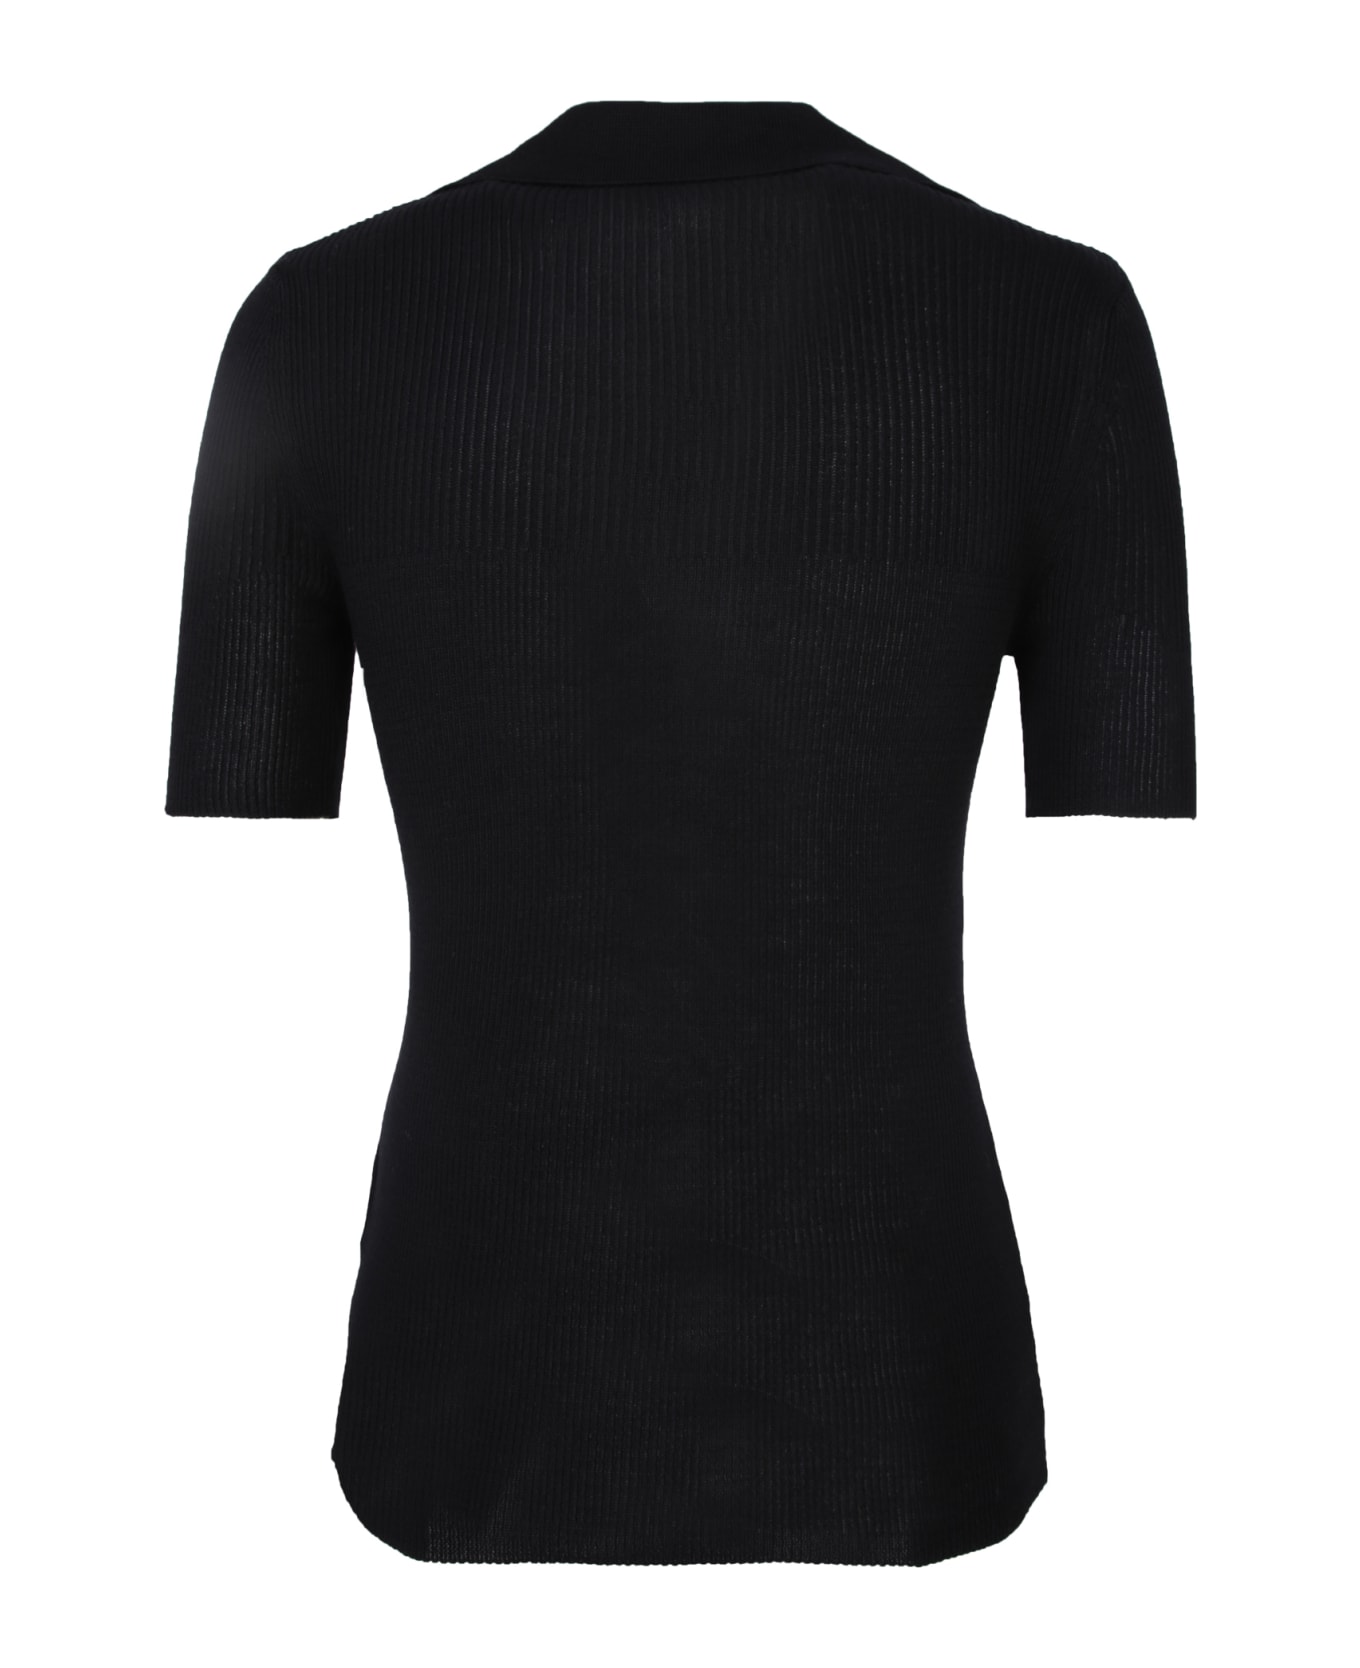 Vivienne Westwood Marina Black Polo Shirt - Black